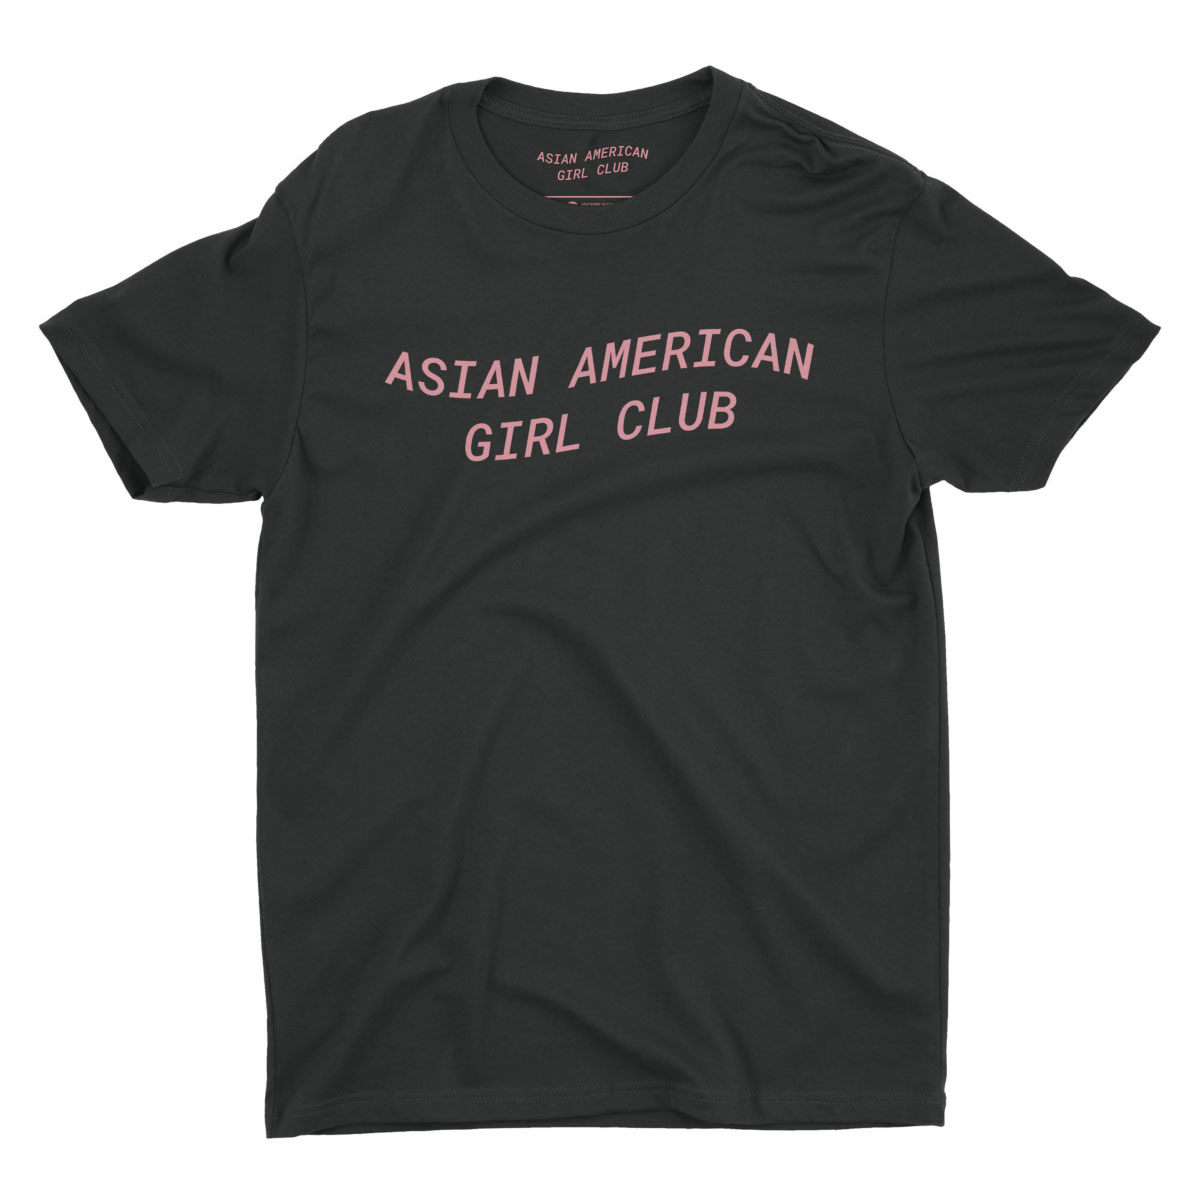 Asian American Girl Club Gold House